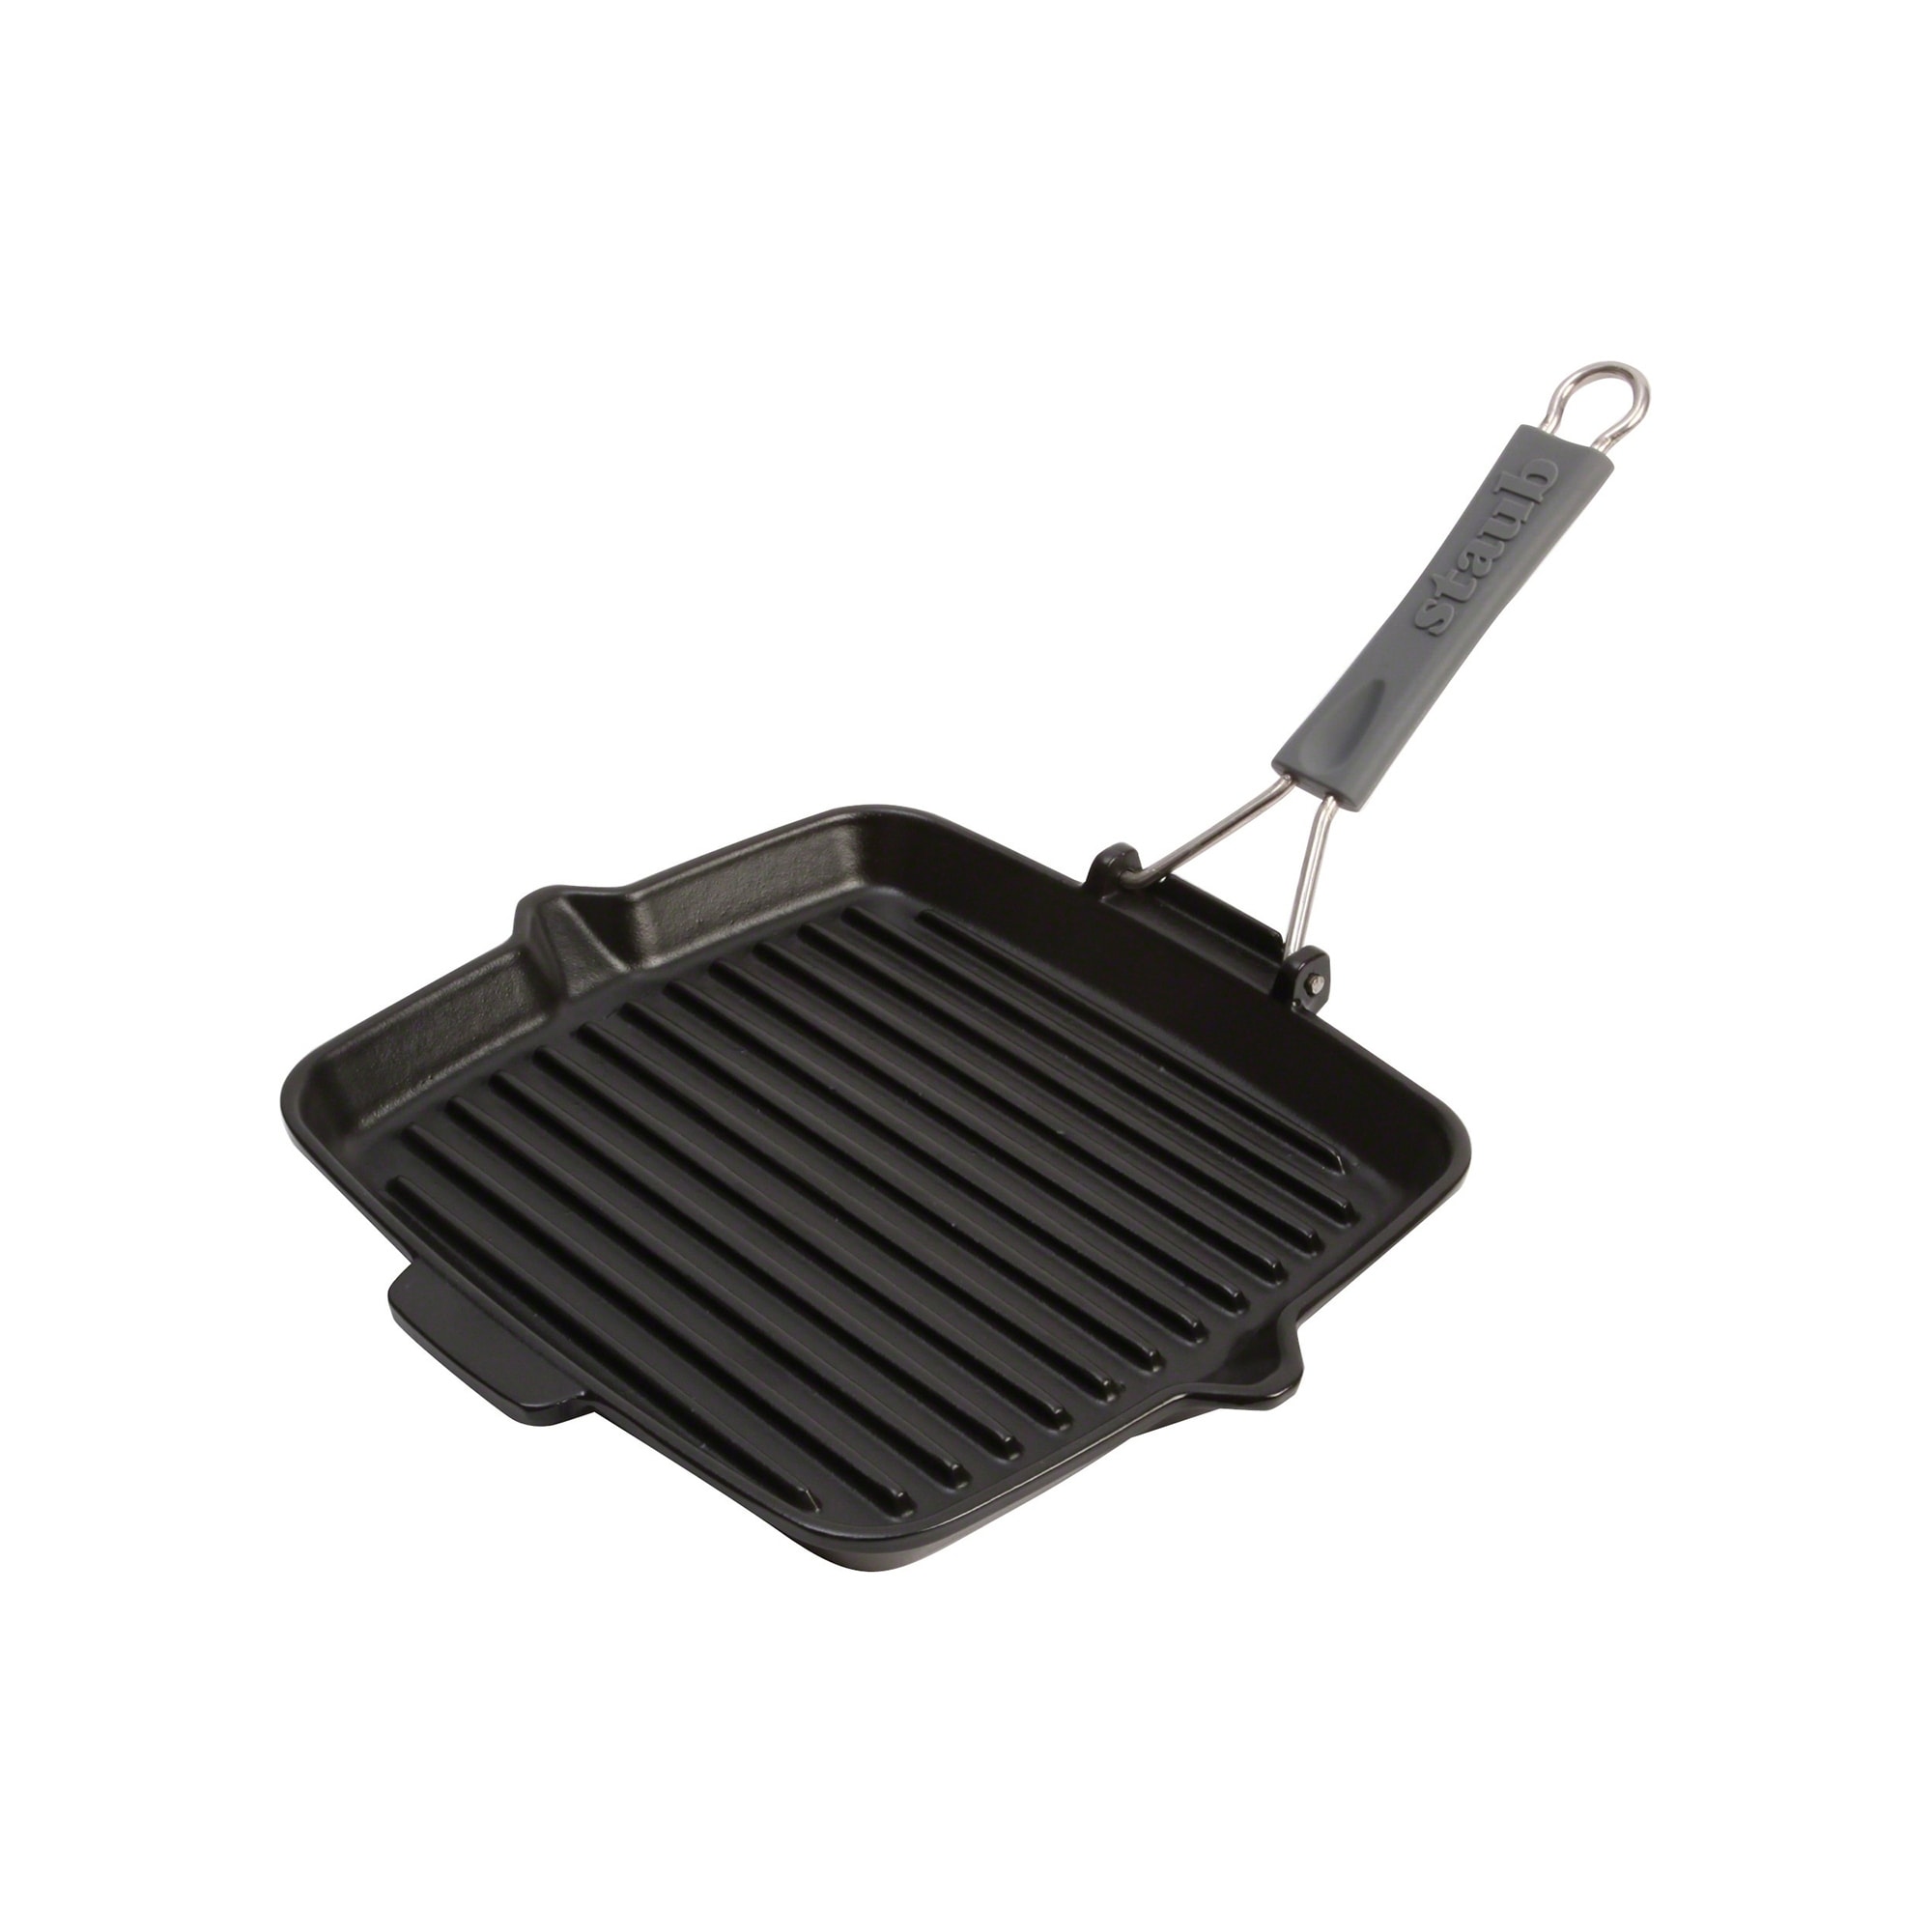 Staub Cast Iron - Fry Pans/ Skillets 11-inch, Traditional Deep Skillet,  black matte